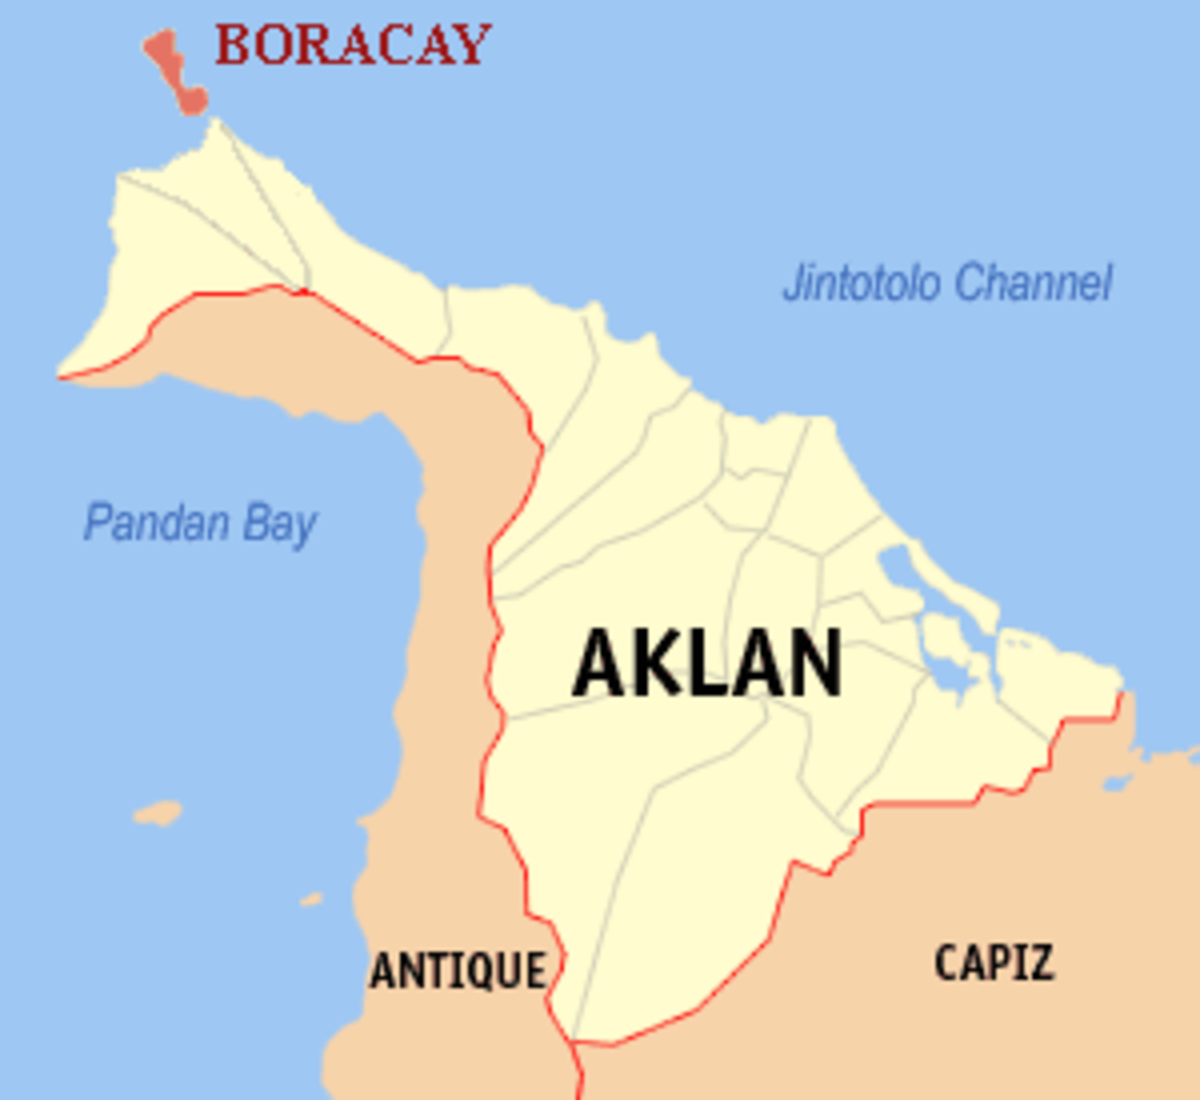 beach-hopping-in-philippines-boracay-puerta-galera-and-batangas